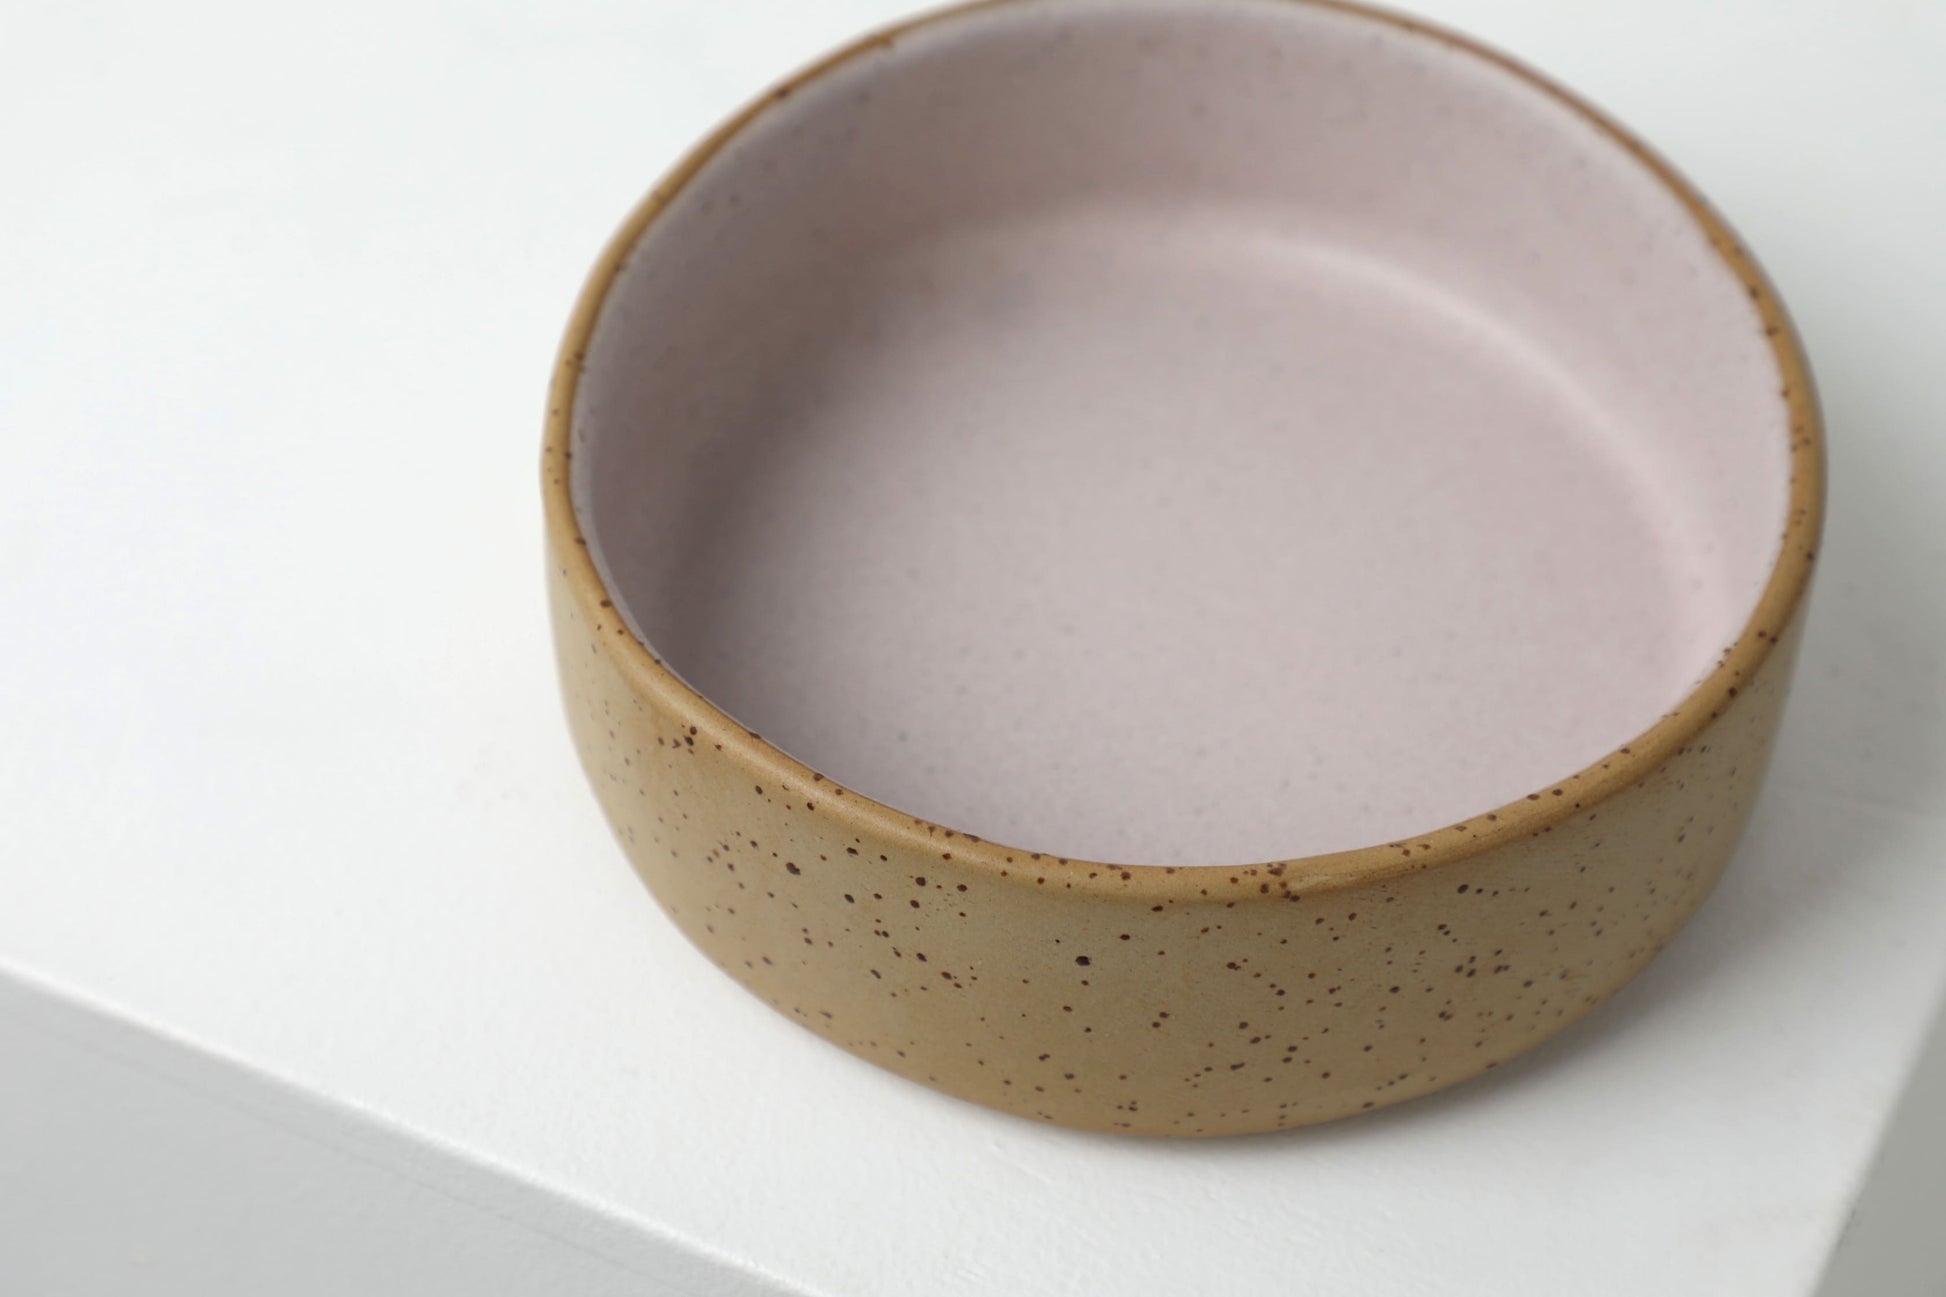 Handmade ceramic dog bowls | RAW+PASTEL PINK - premium dog goods handmade in Europe by animalistus